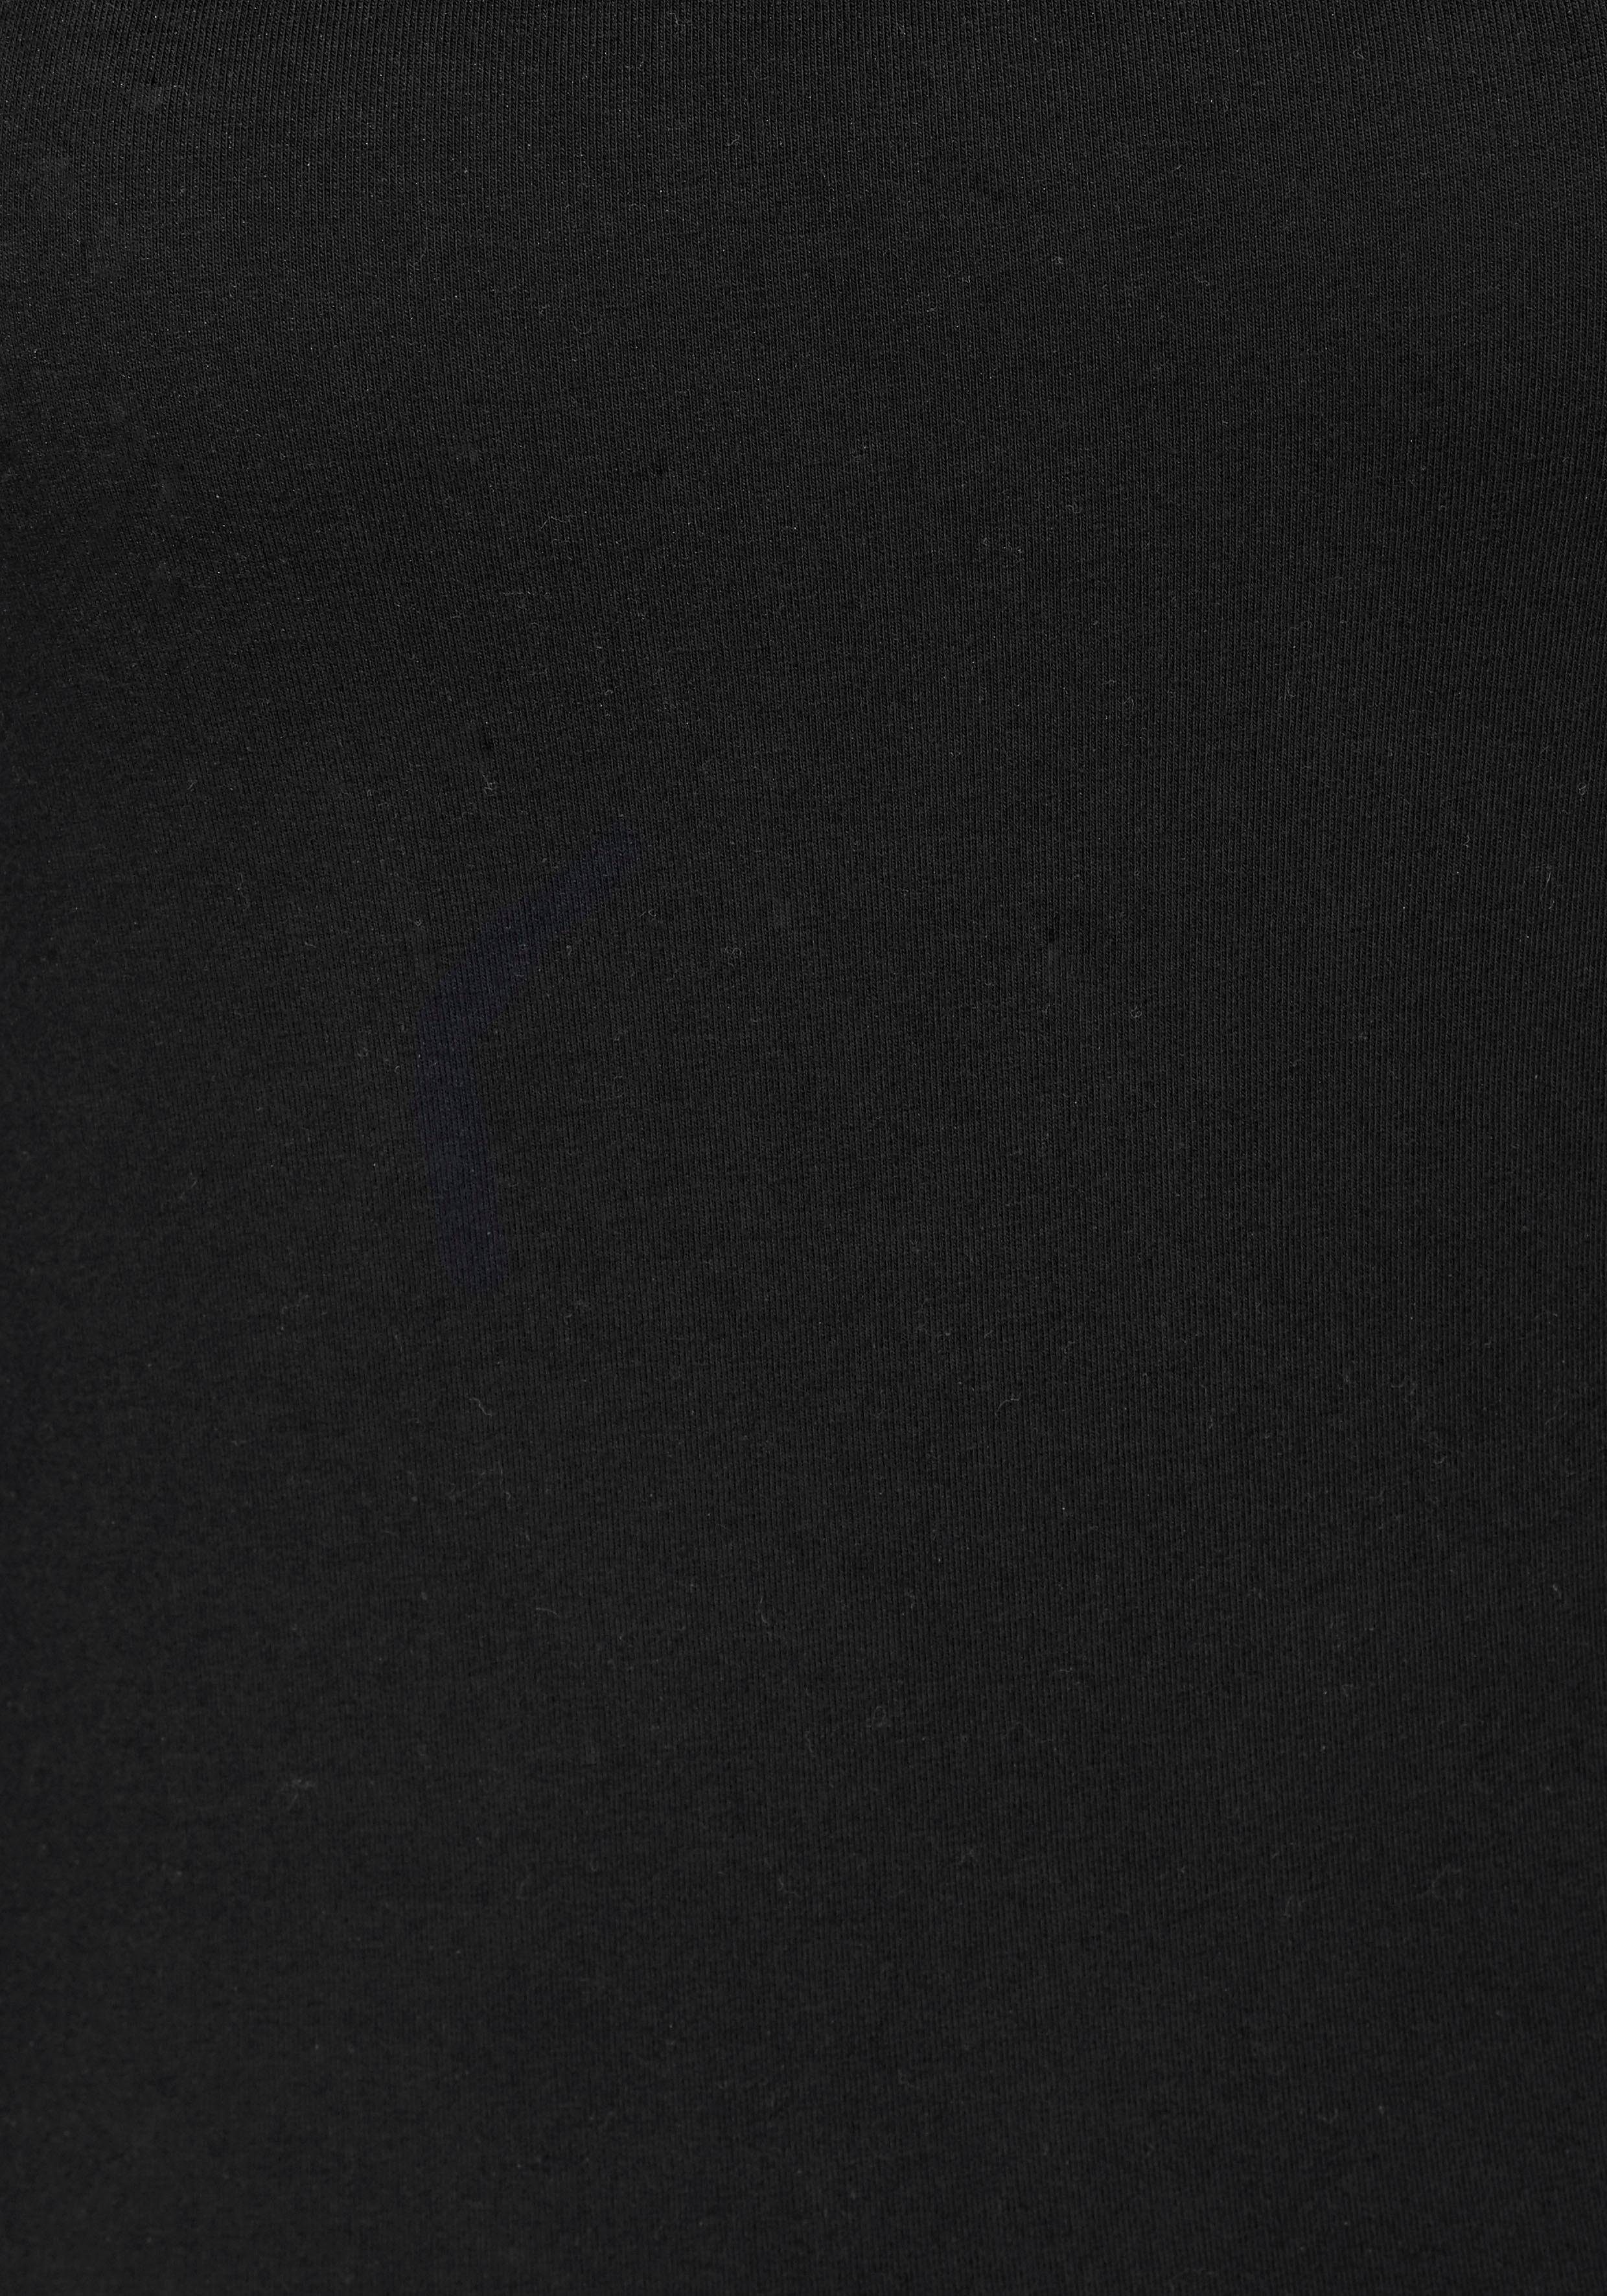 Spaghettiträger-Top, Unterziehshirt aus Unterhemd (2er-Pack) schwarz H.I.S Baumwoll-Qualität, elastischer